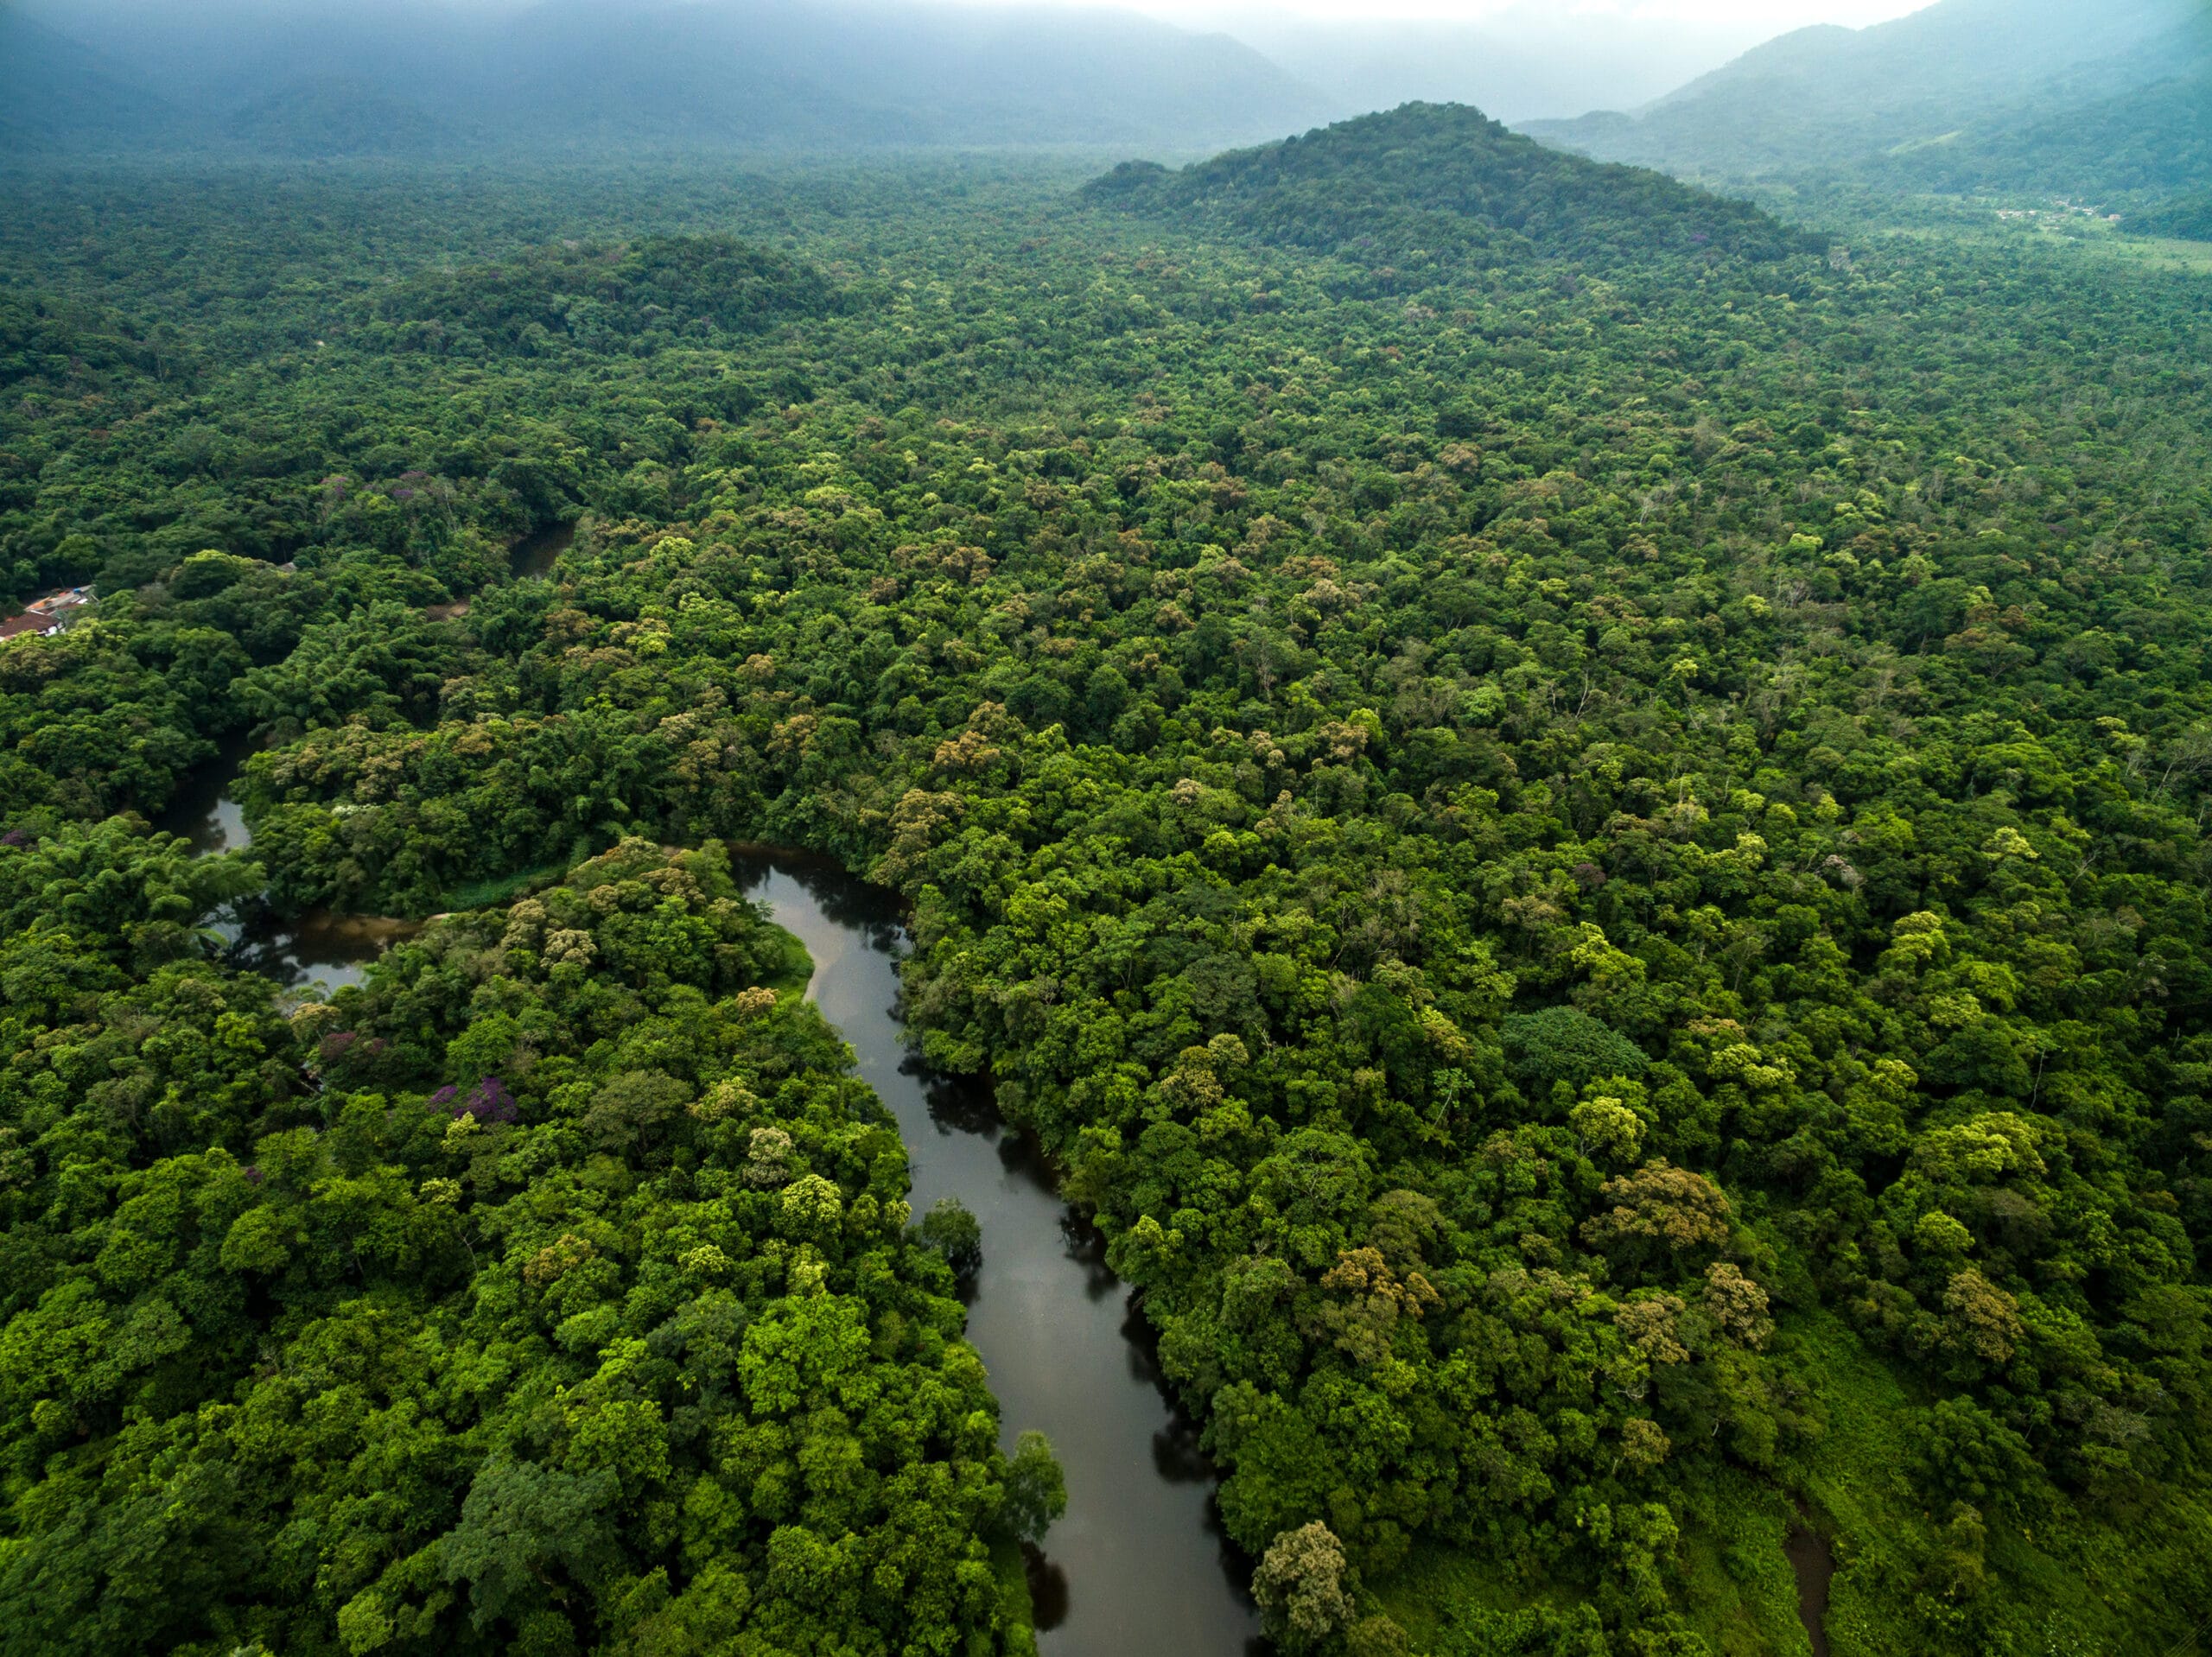 Saving rainforest